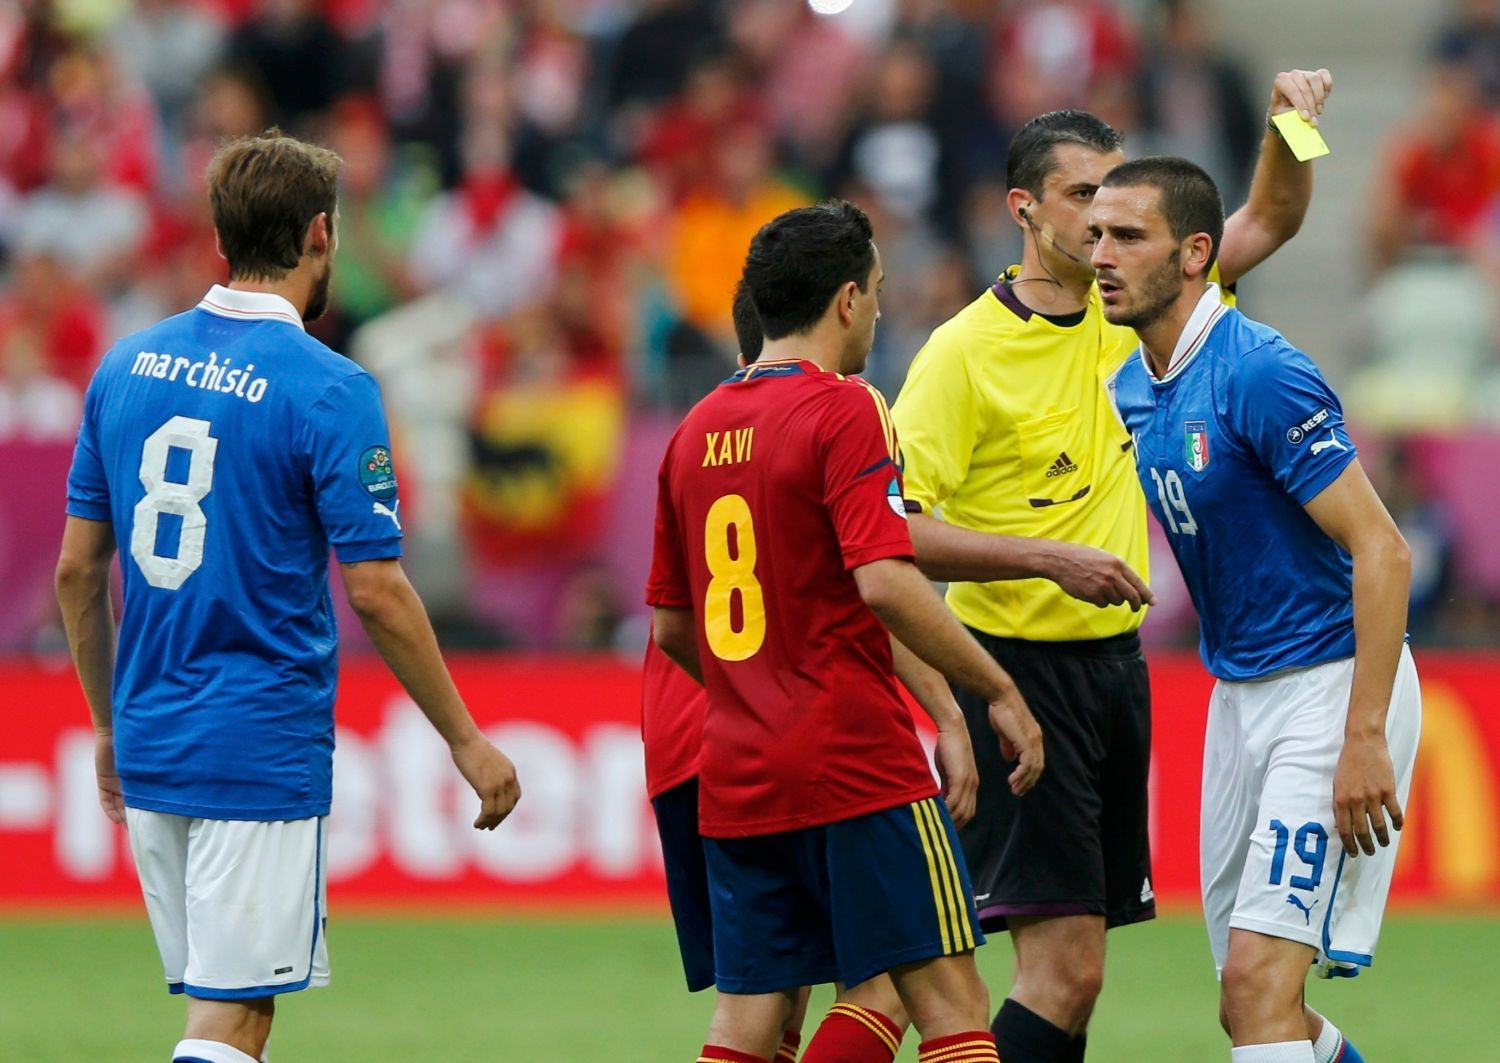 Claudio Marchisio, Xavi Hernandez, rozhodčí Viktor Kassai a Leonardo Bonucci v utkání základní skupiny mezi Španělskem a Itálií na Euru 2012